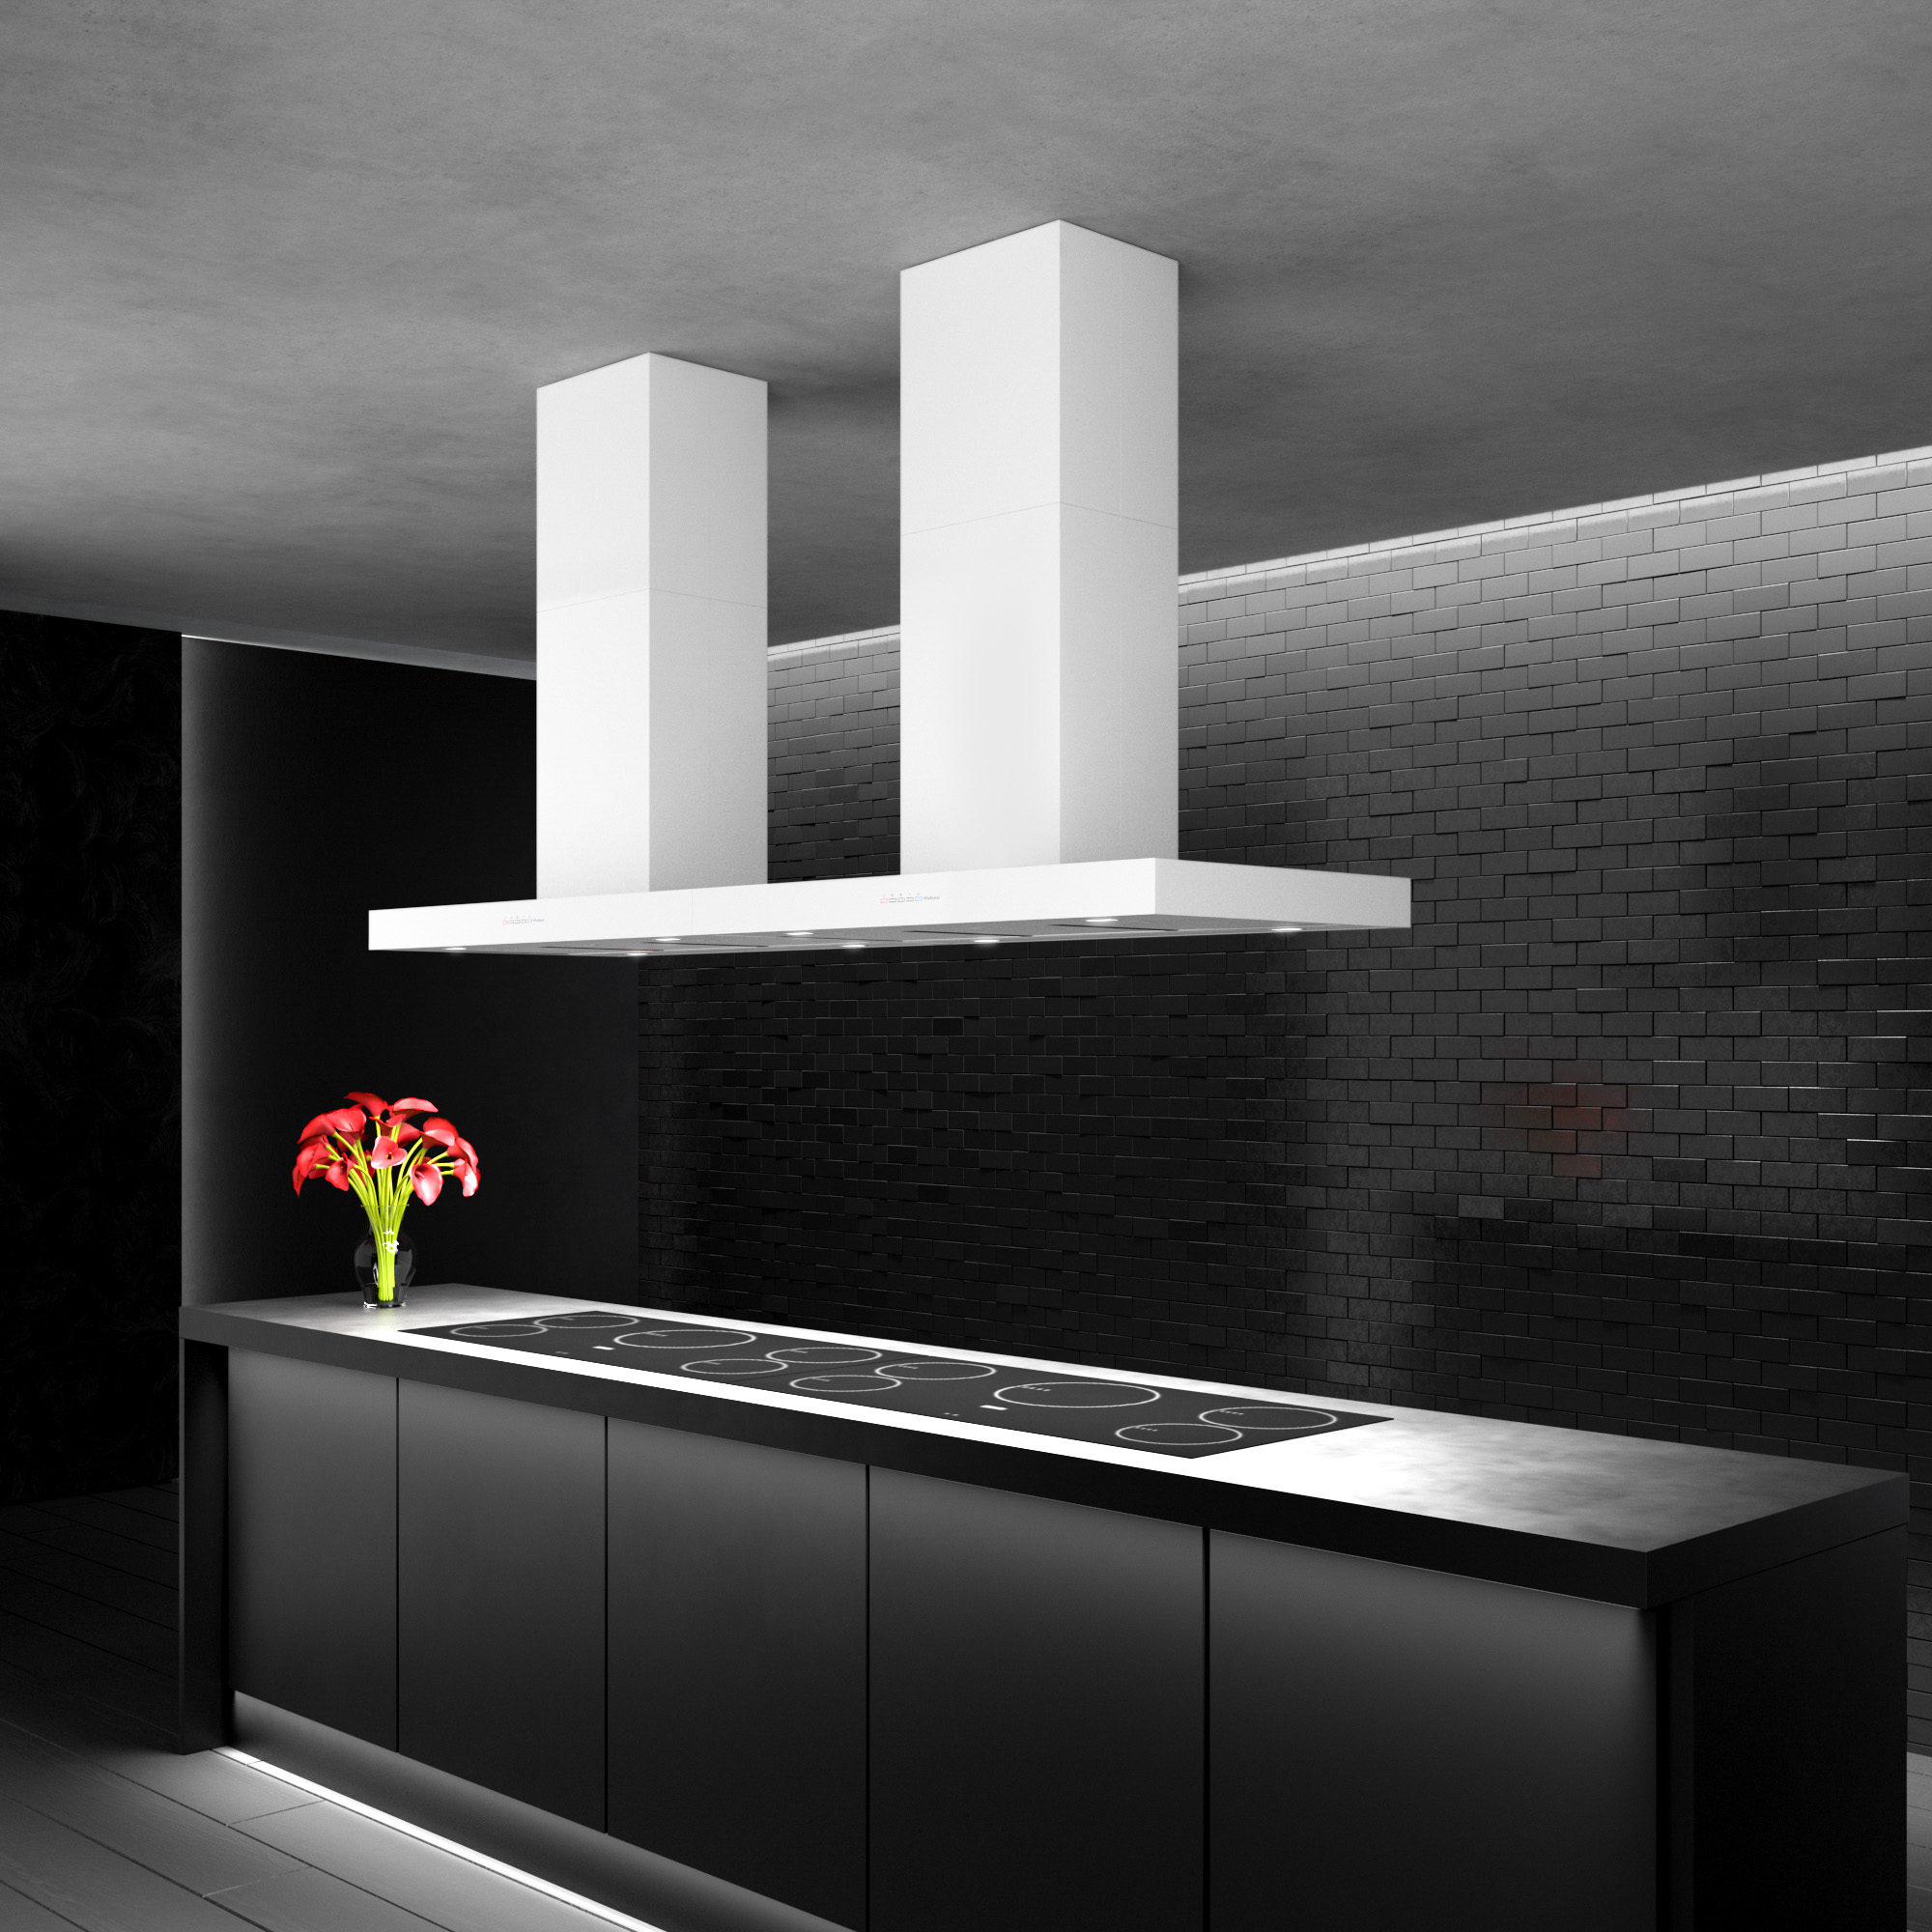 Black kitchen cabinets range hood | Ceiling mount range hood